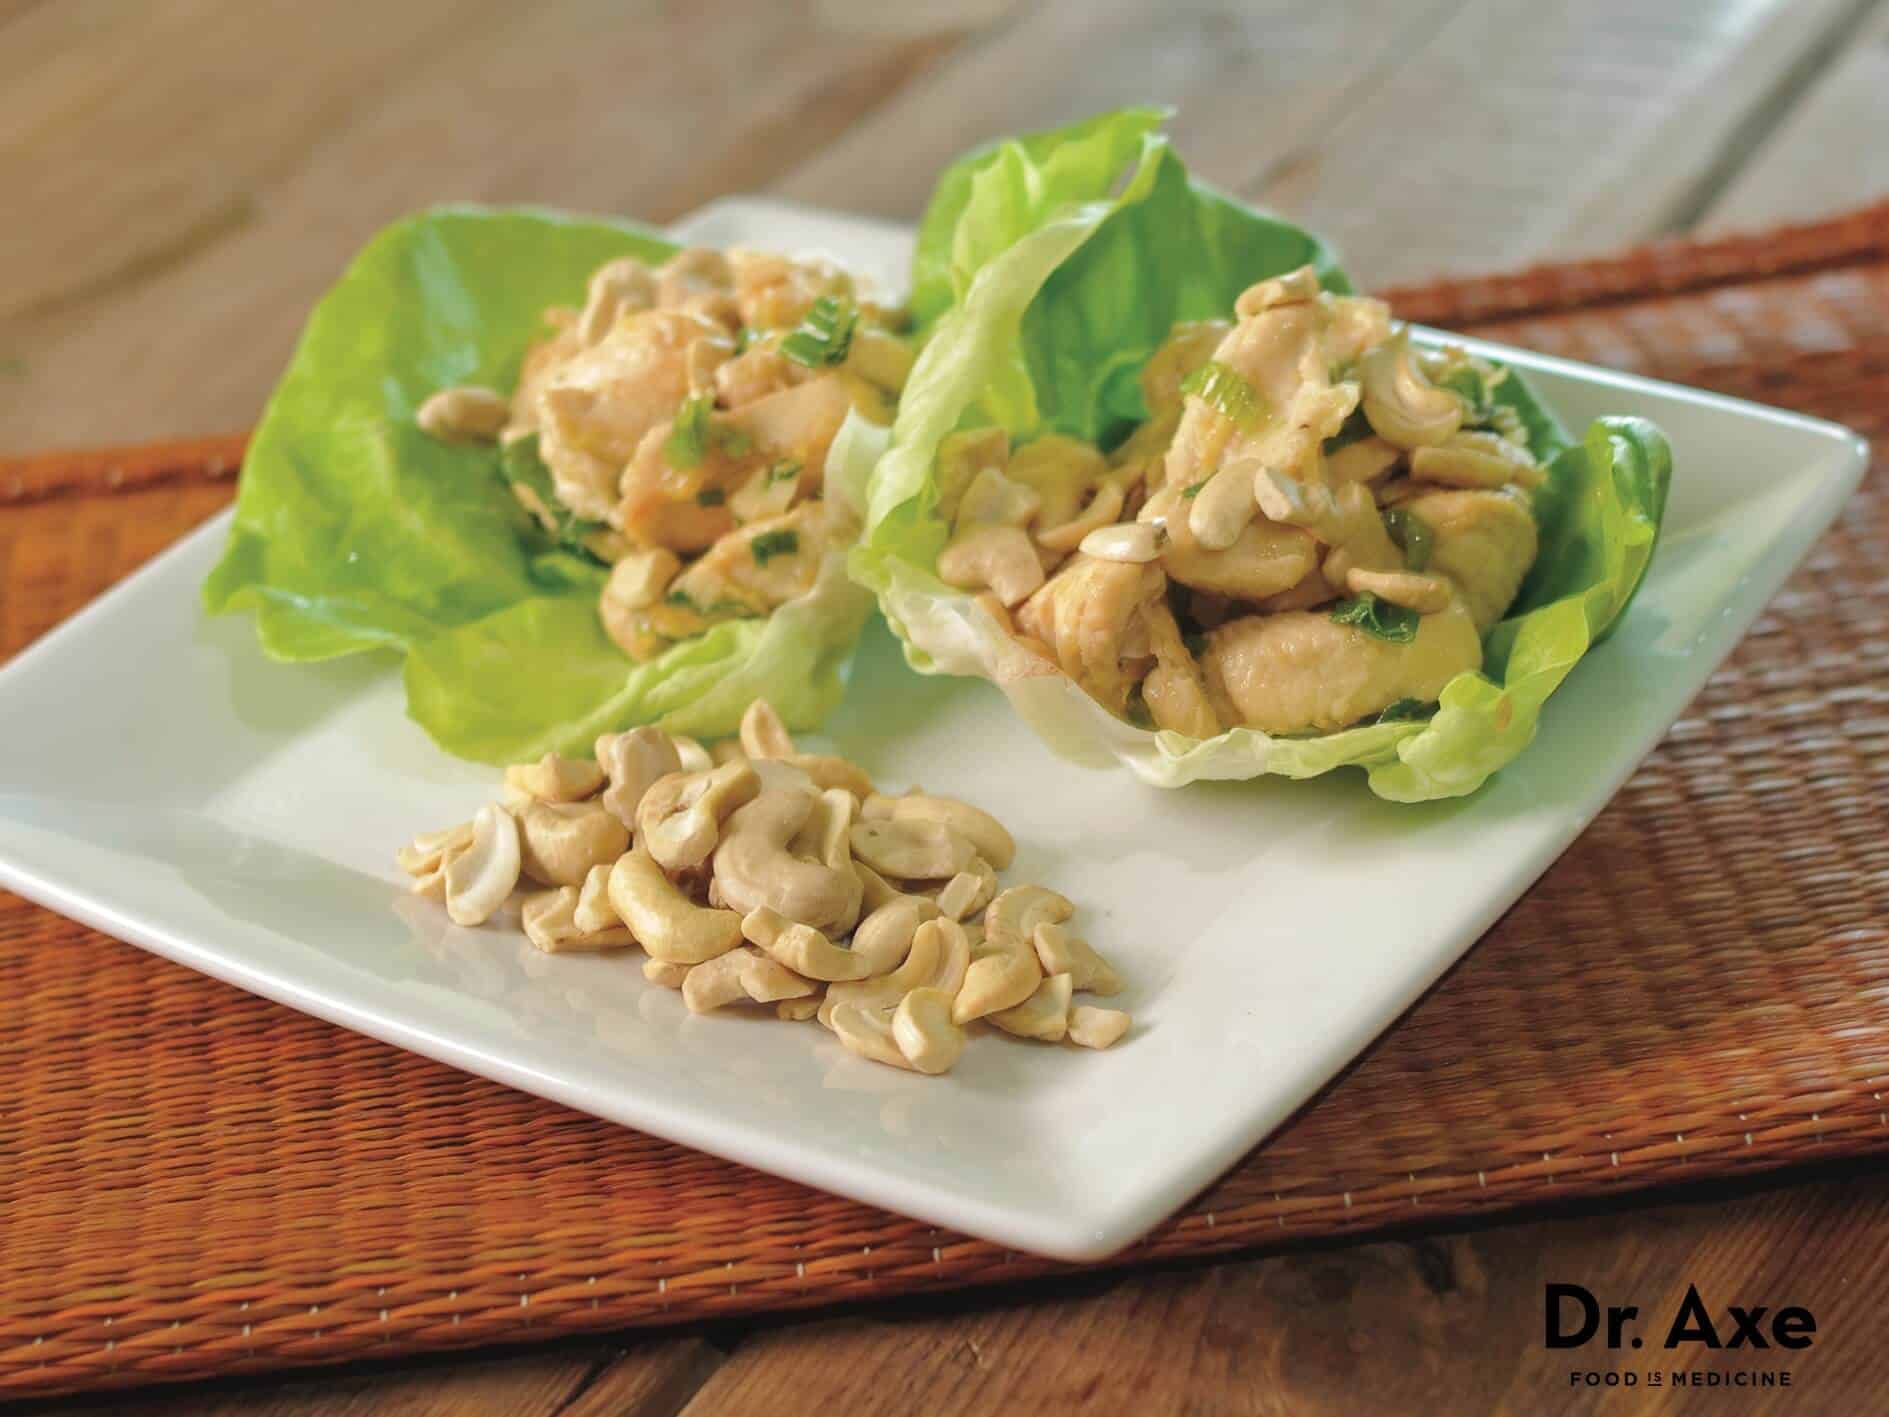 Cashew chicken lettuce wraps recipe - Dr. Axe